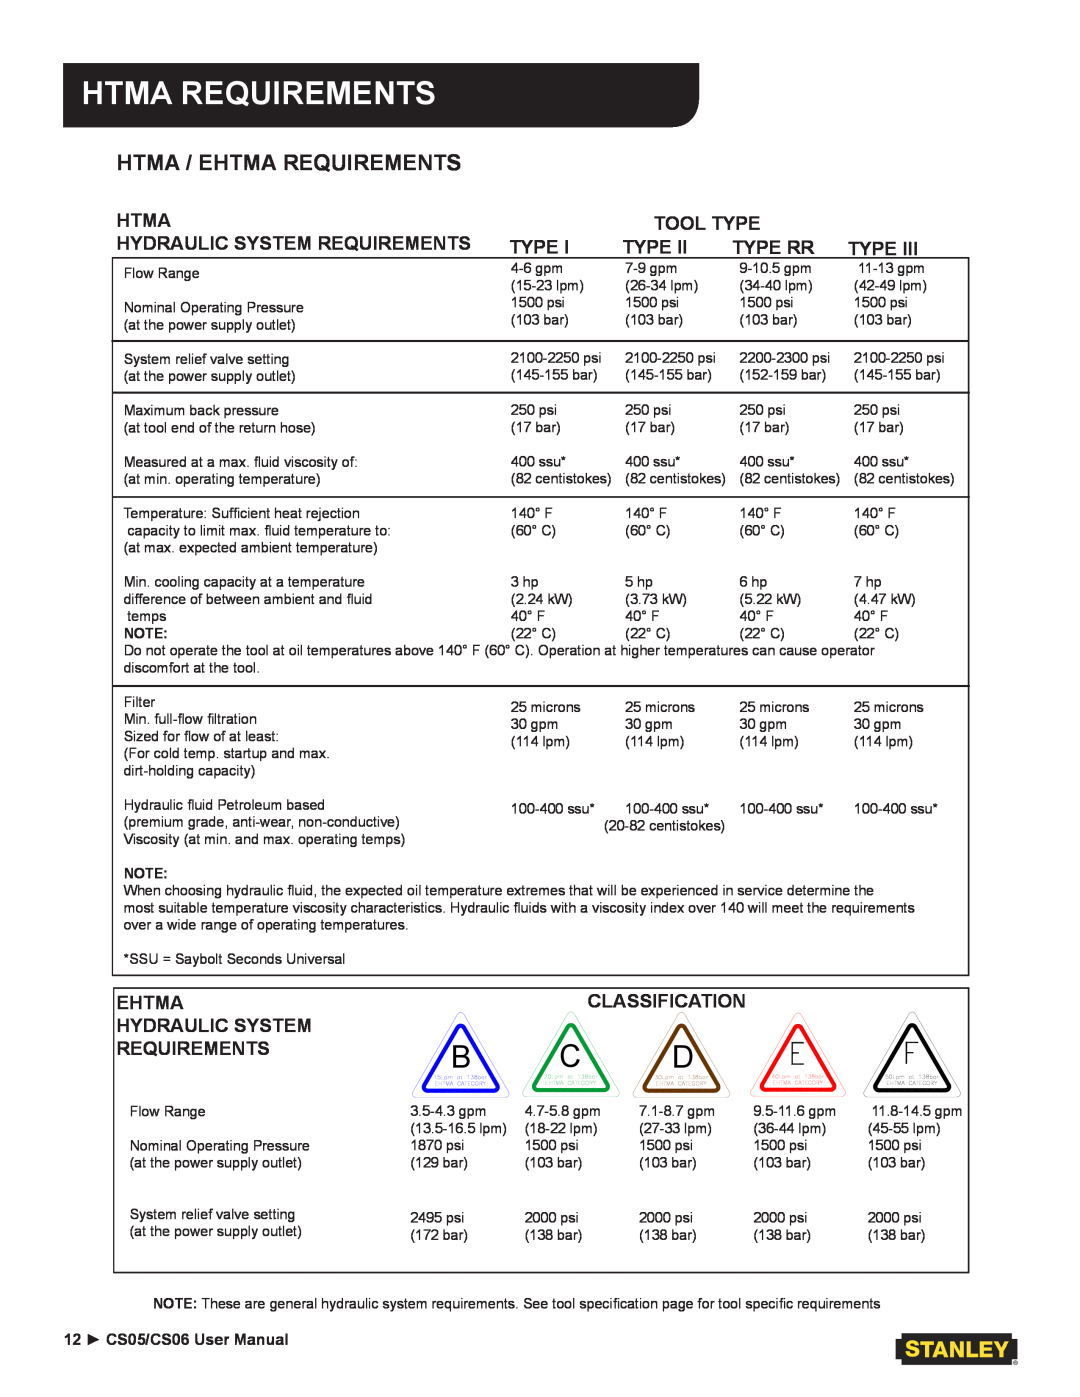 Stanley Black & Decker CS05/CS06 user manual Htma Requirements, Htma / Ehtma Requirements 